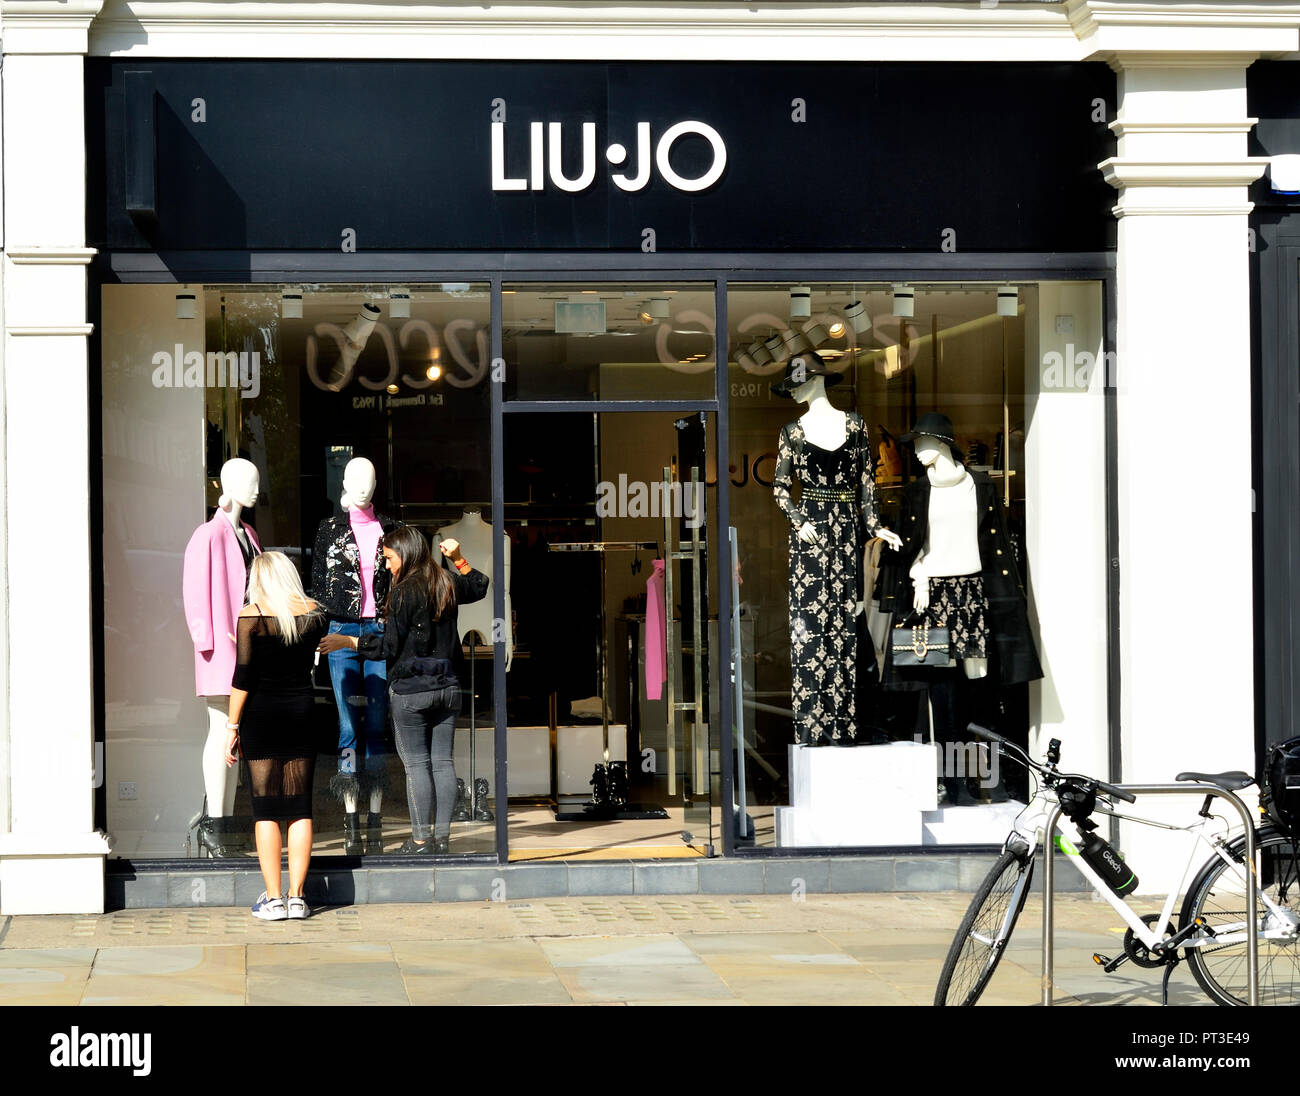 Liu-Jo shop, 104 King's Road, London, England, UK Stock Photo - Alamy